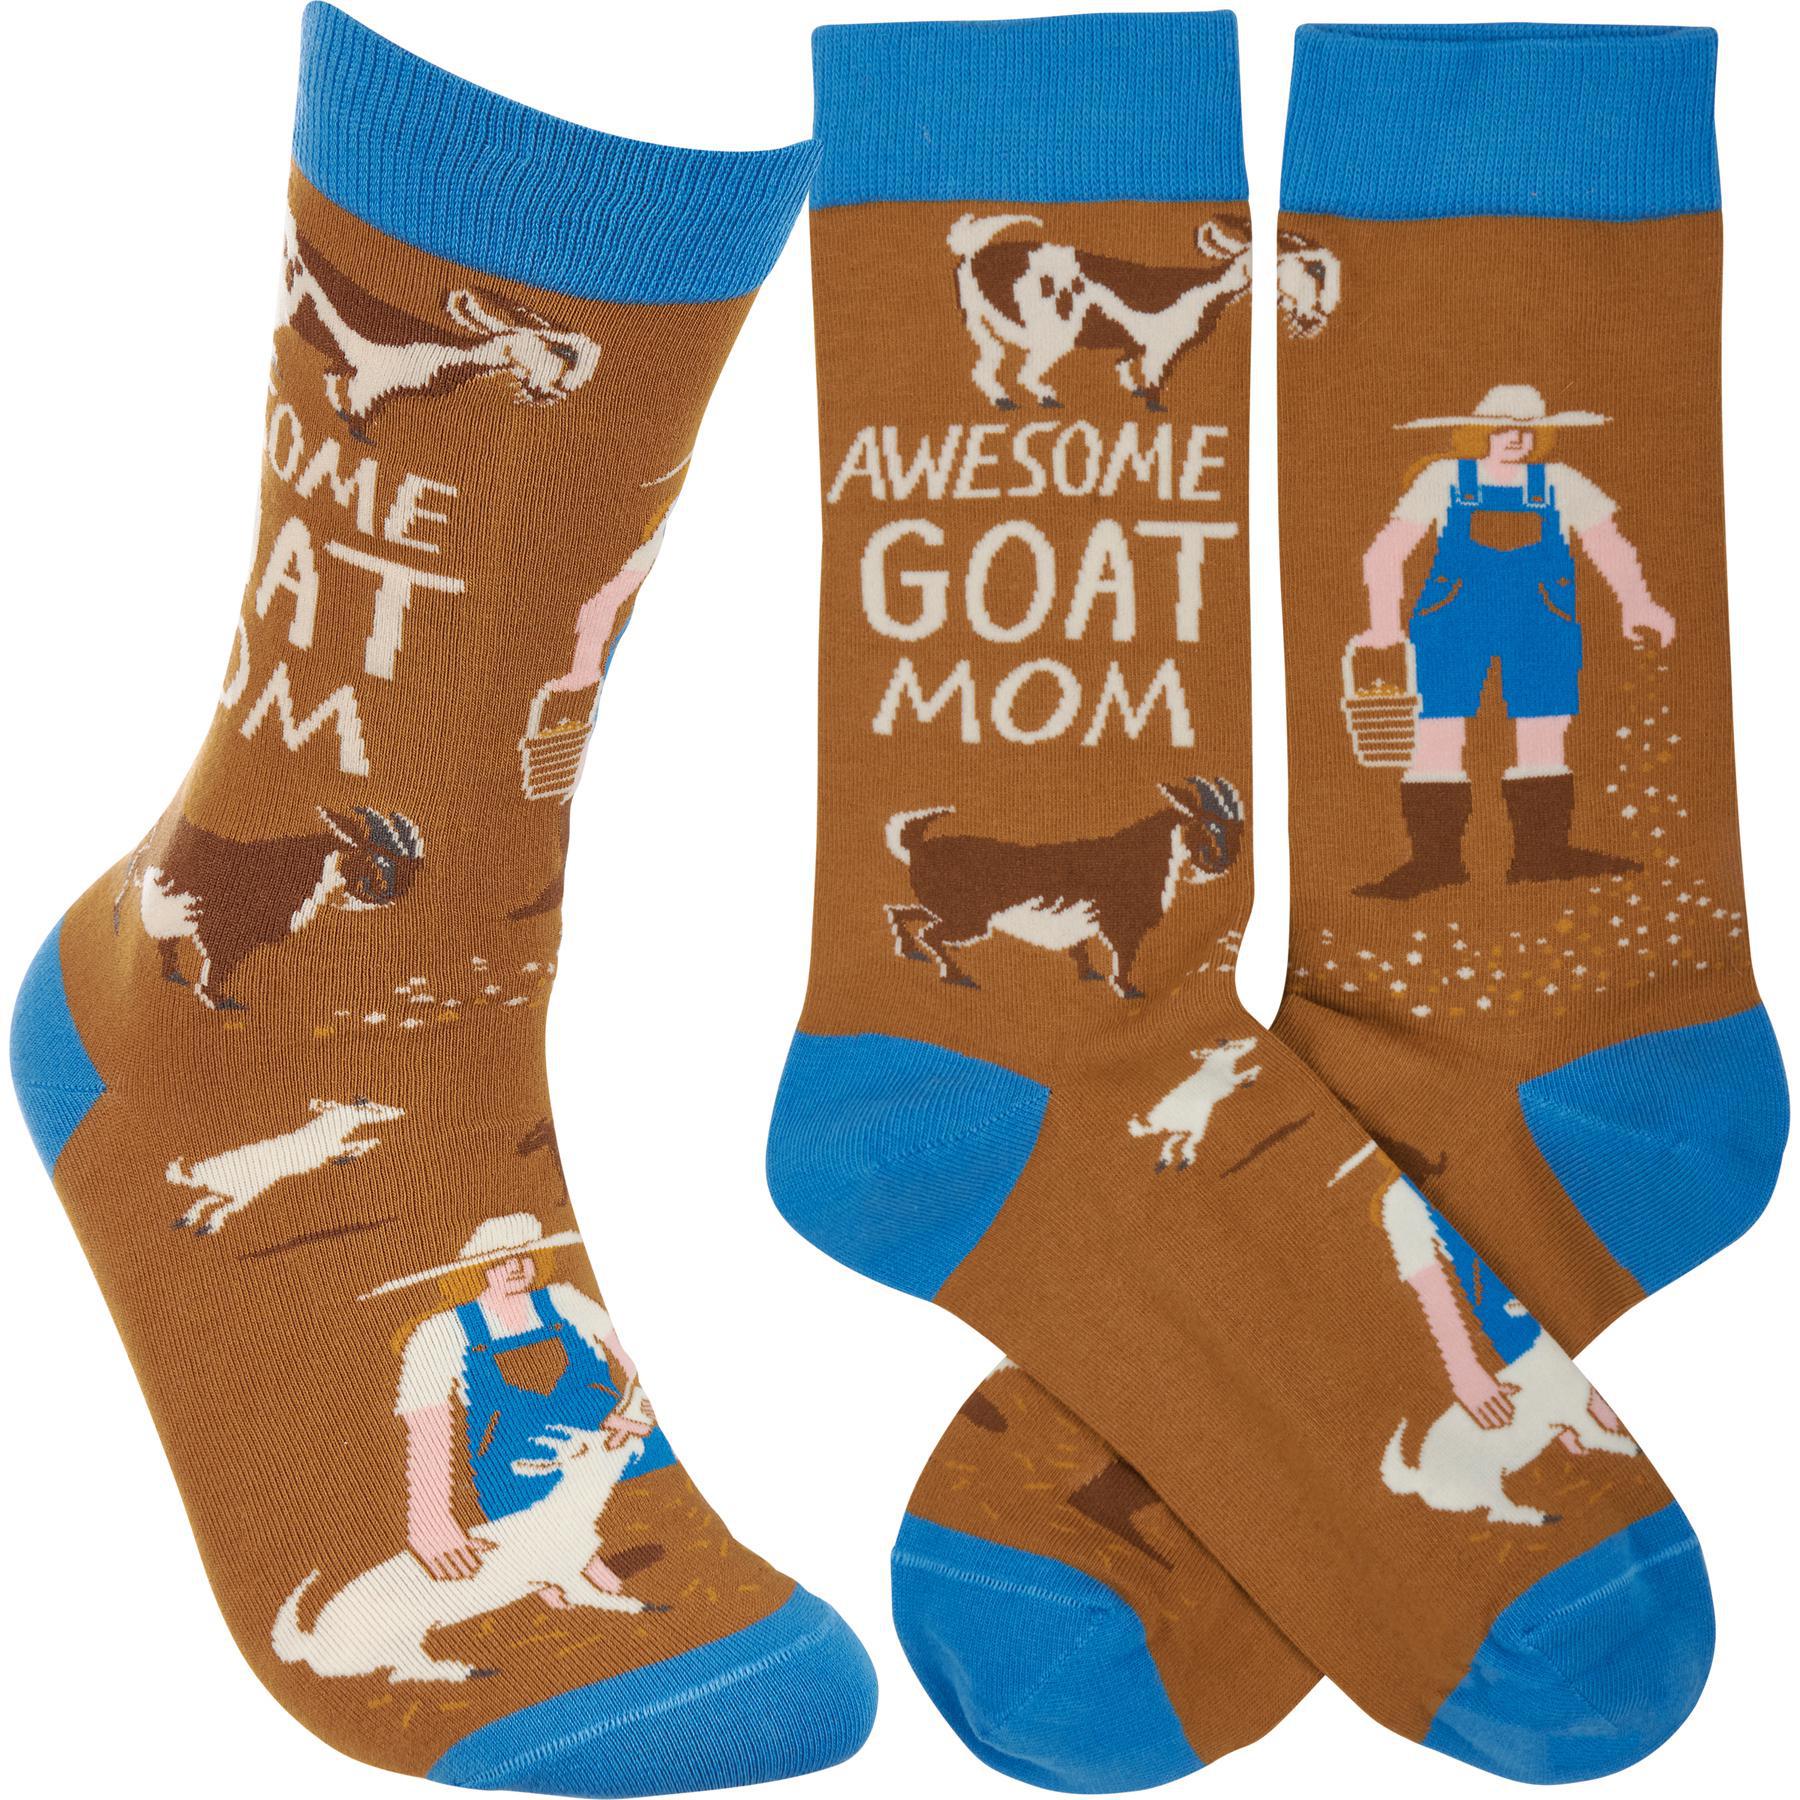 Awesome Goat Mom Socks